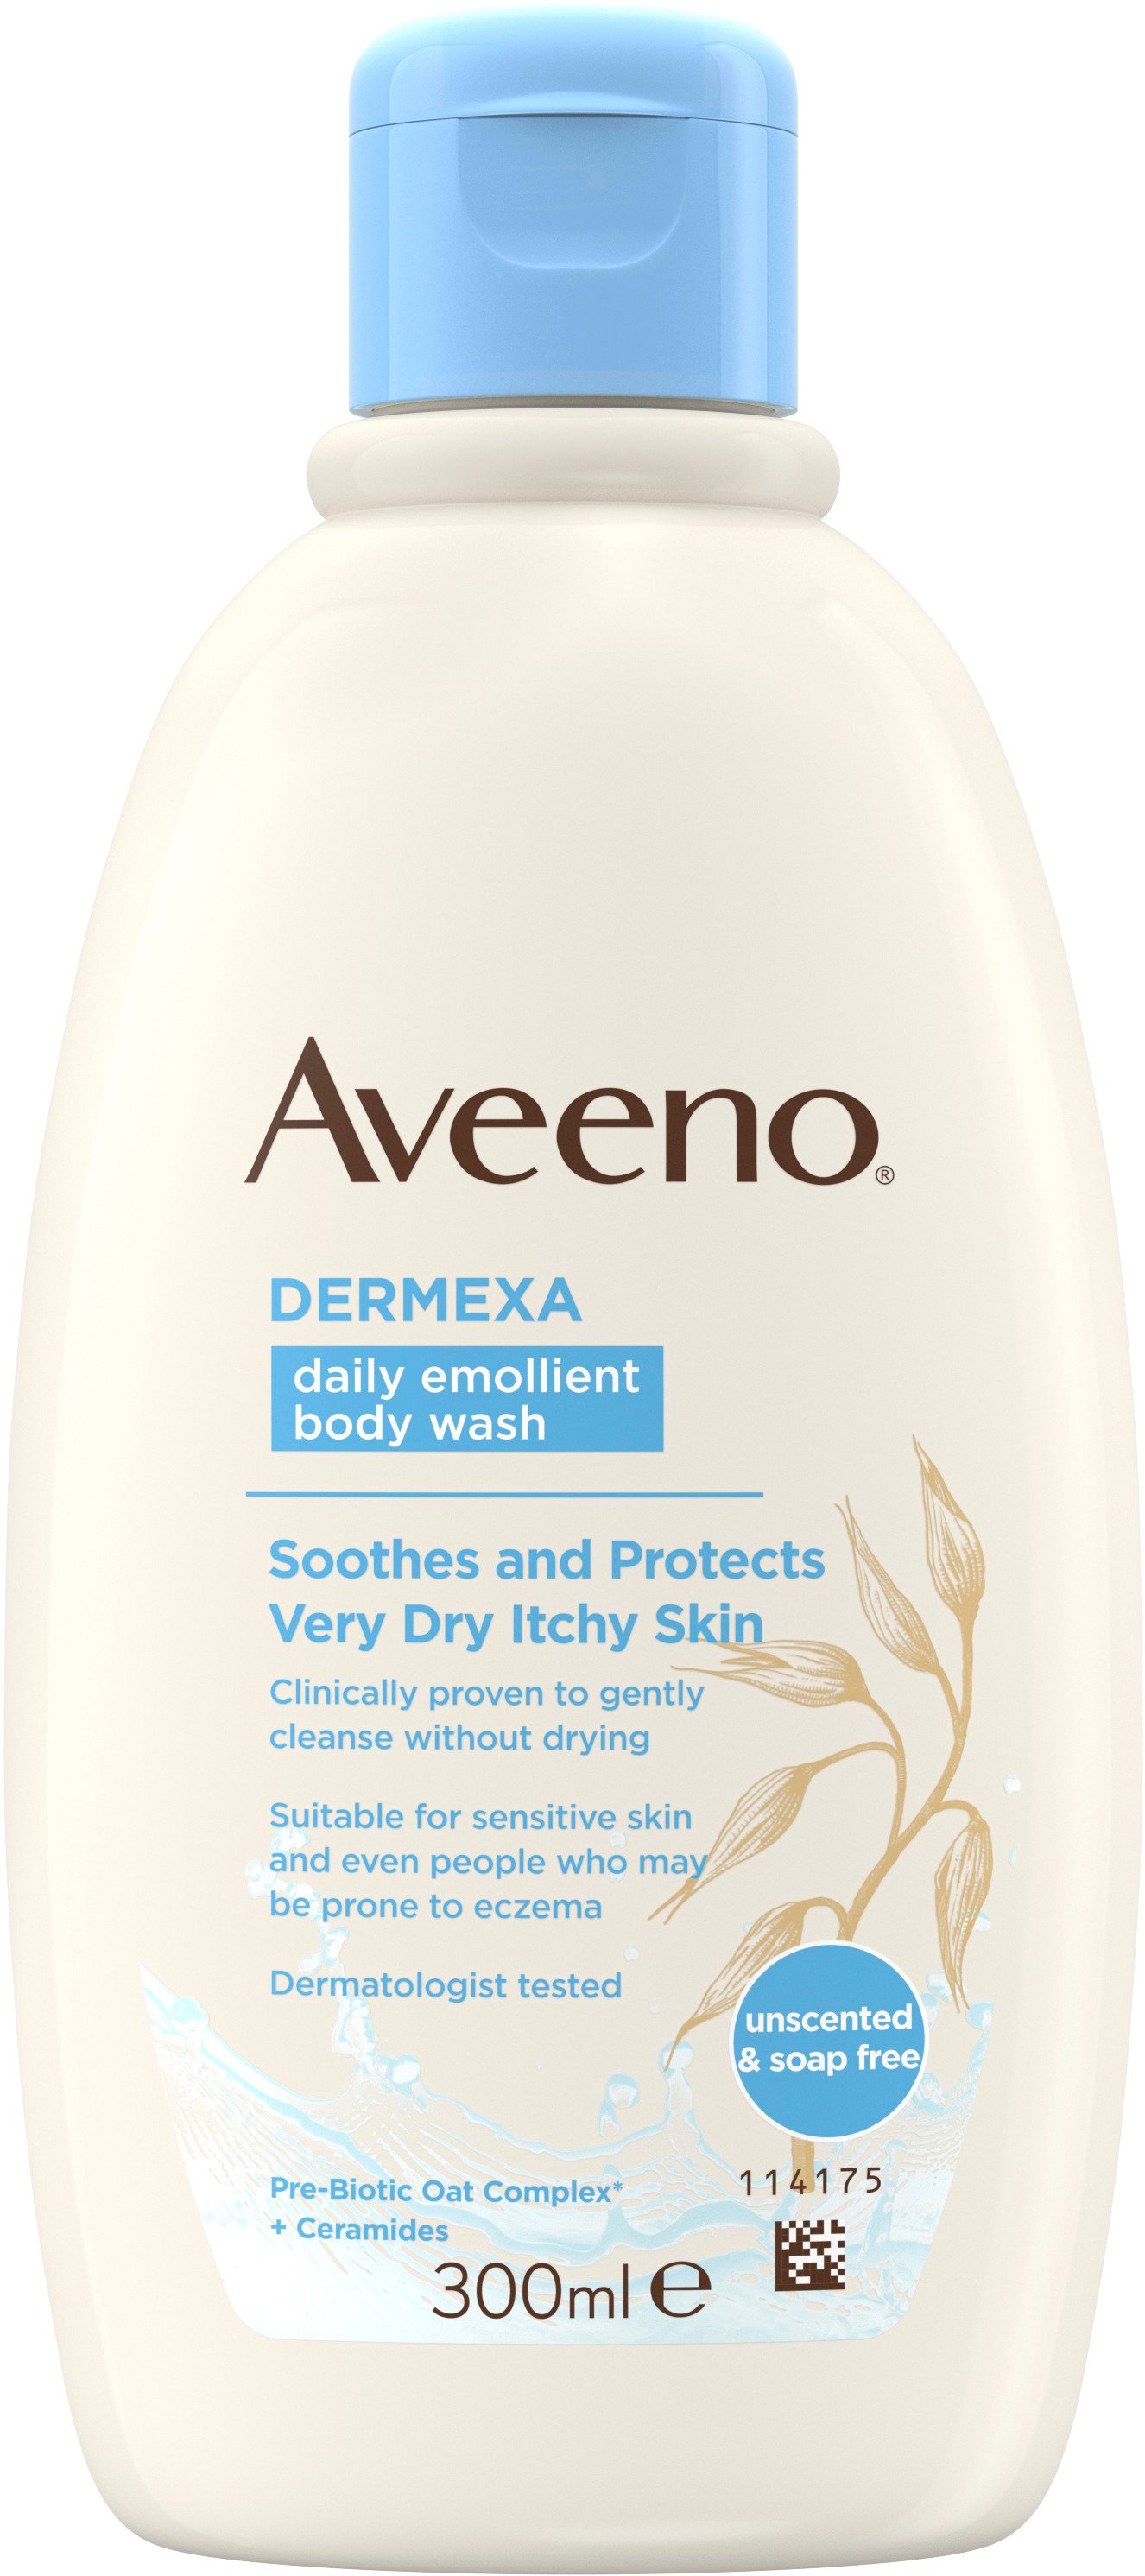 Aveeno Dermexa Body Wash 300 ml